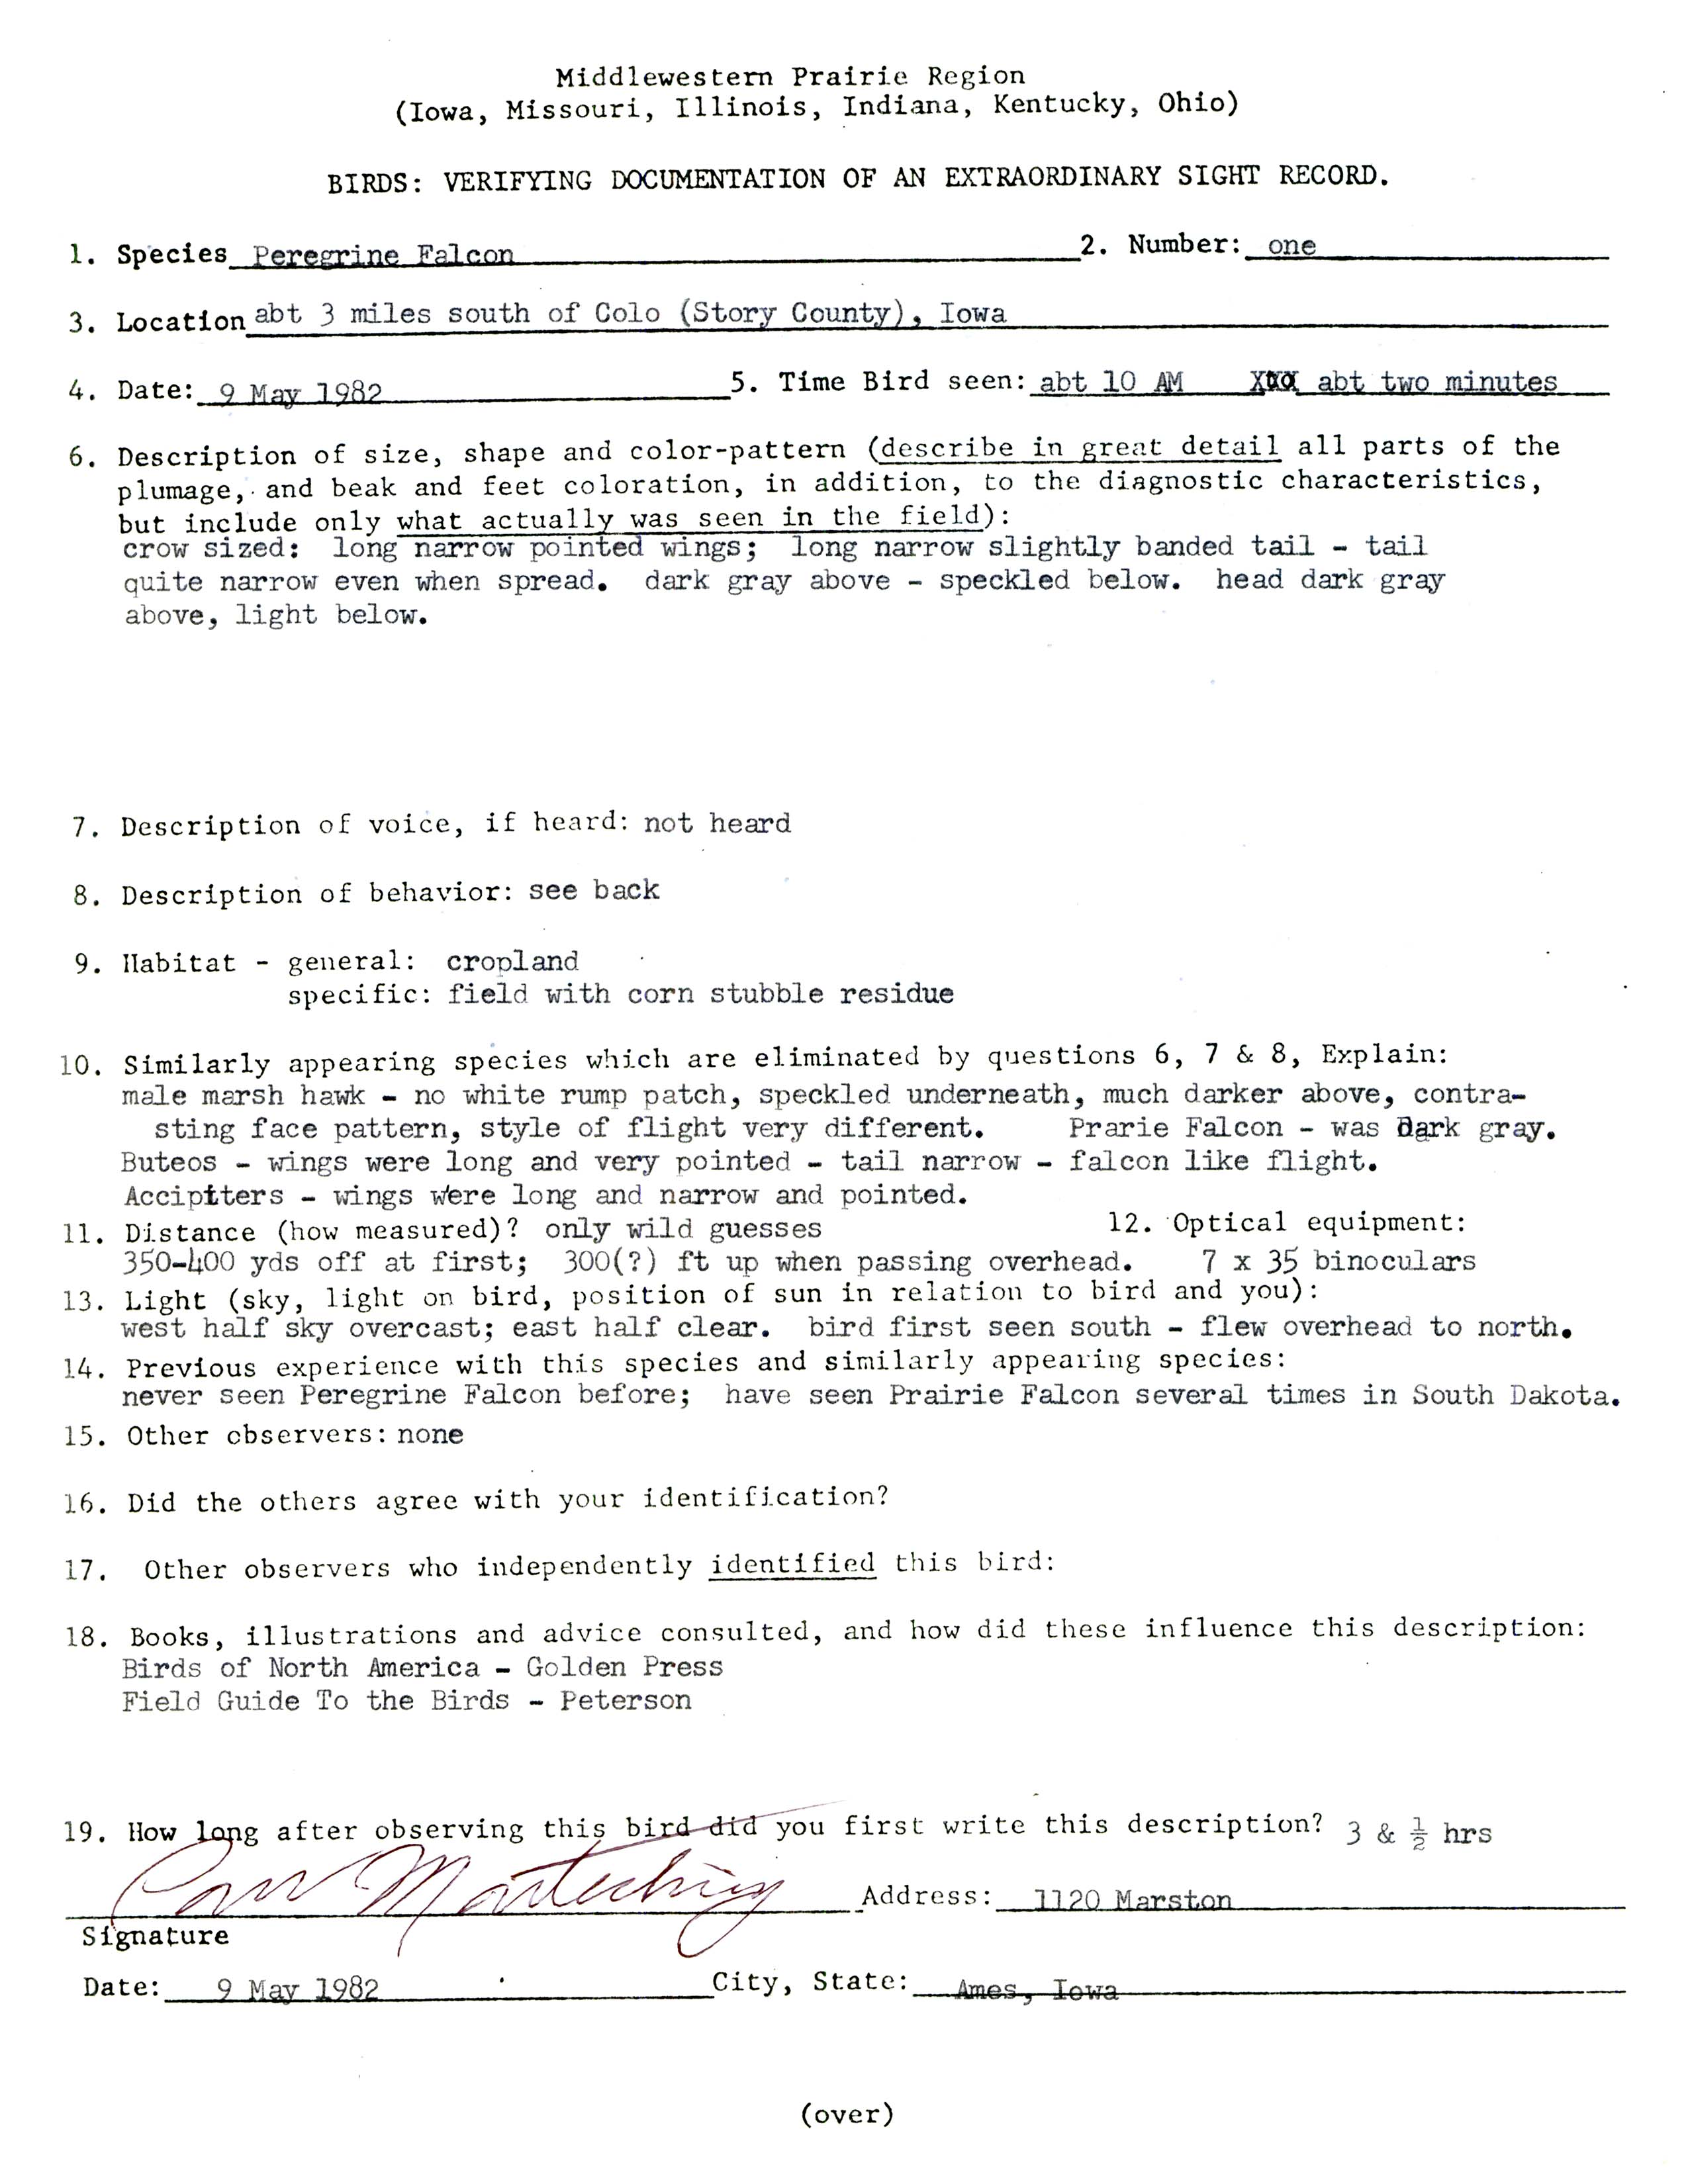 Rare bird documentation form for Peregrine Falcon at Colo, 1982